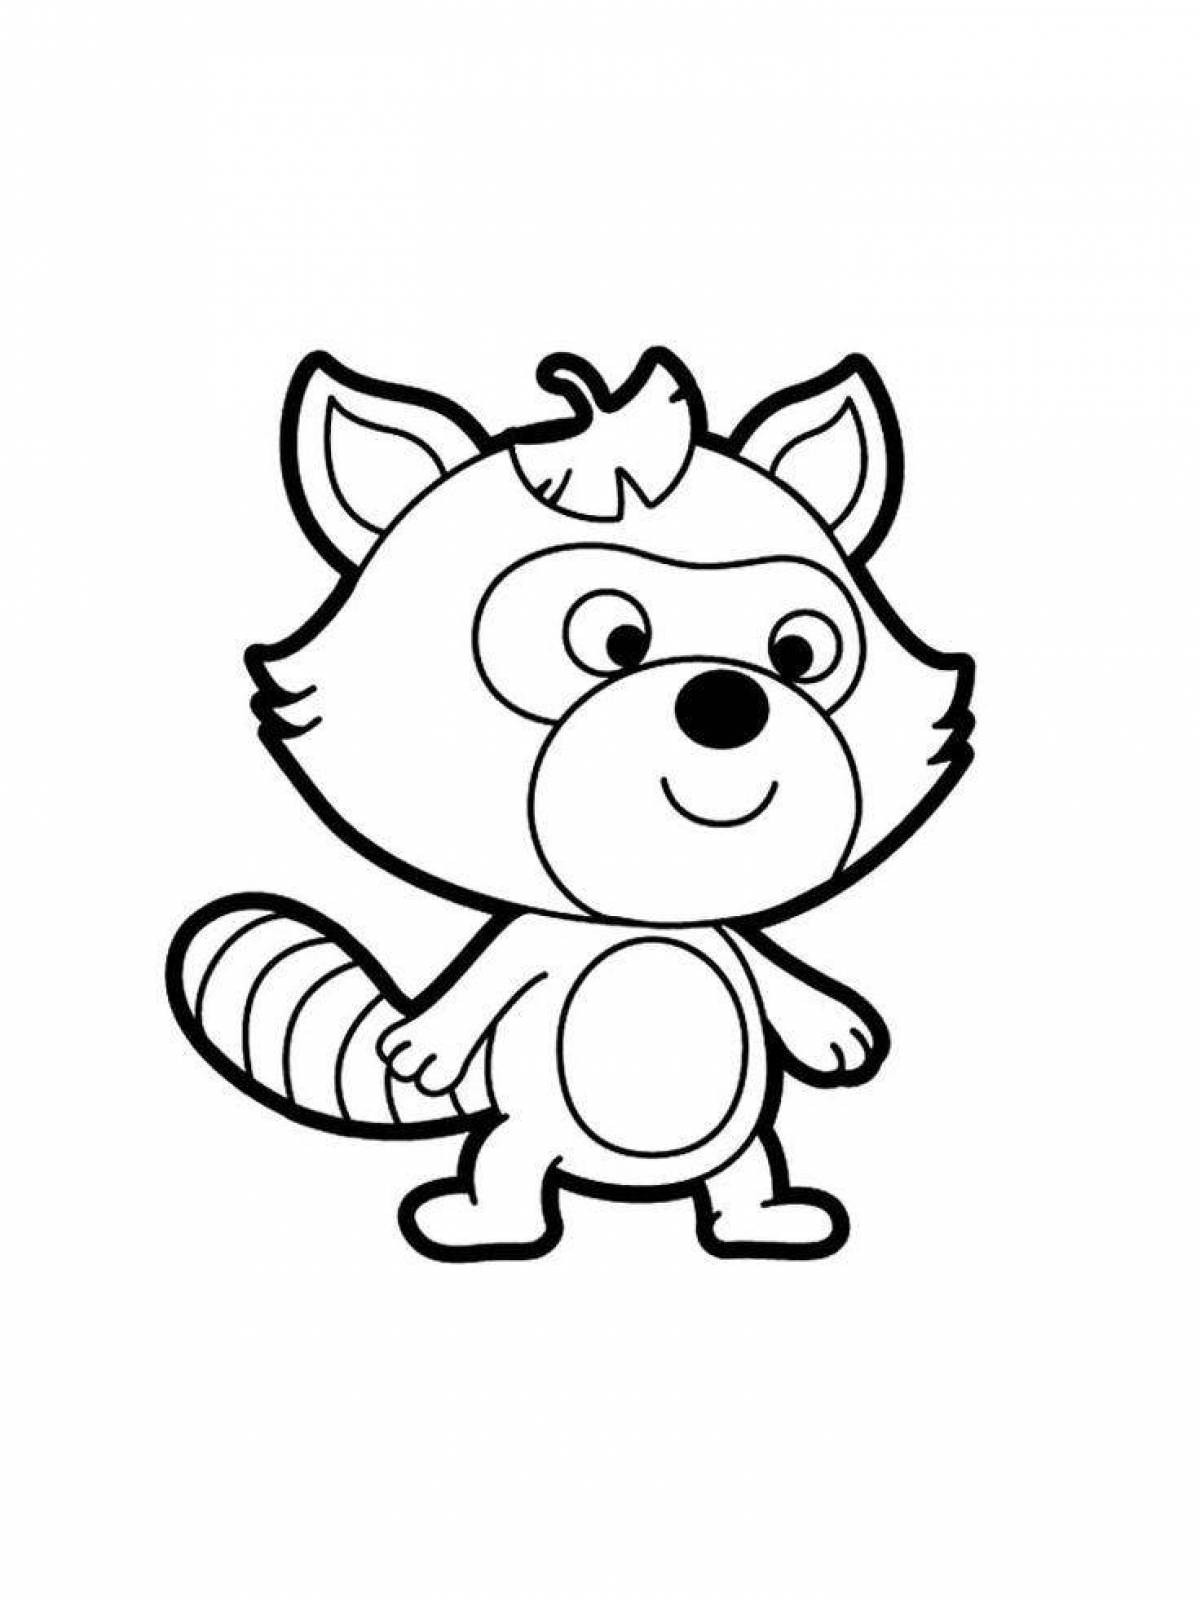 Rampant raccoon coloring page